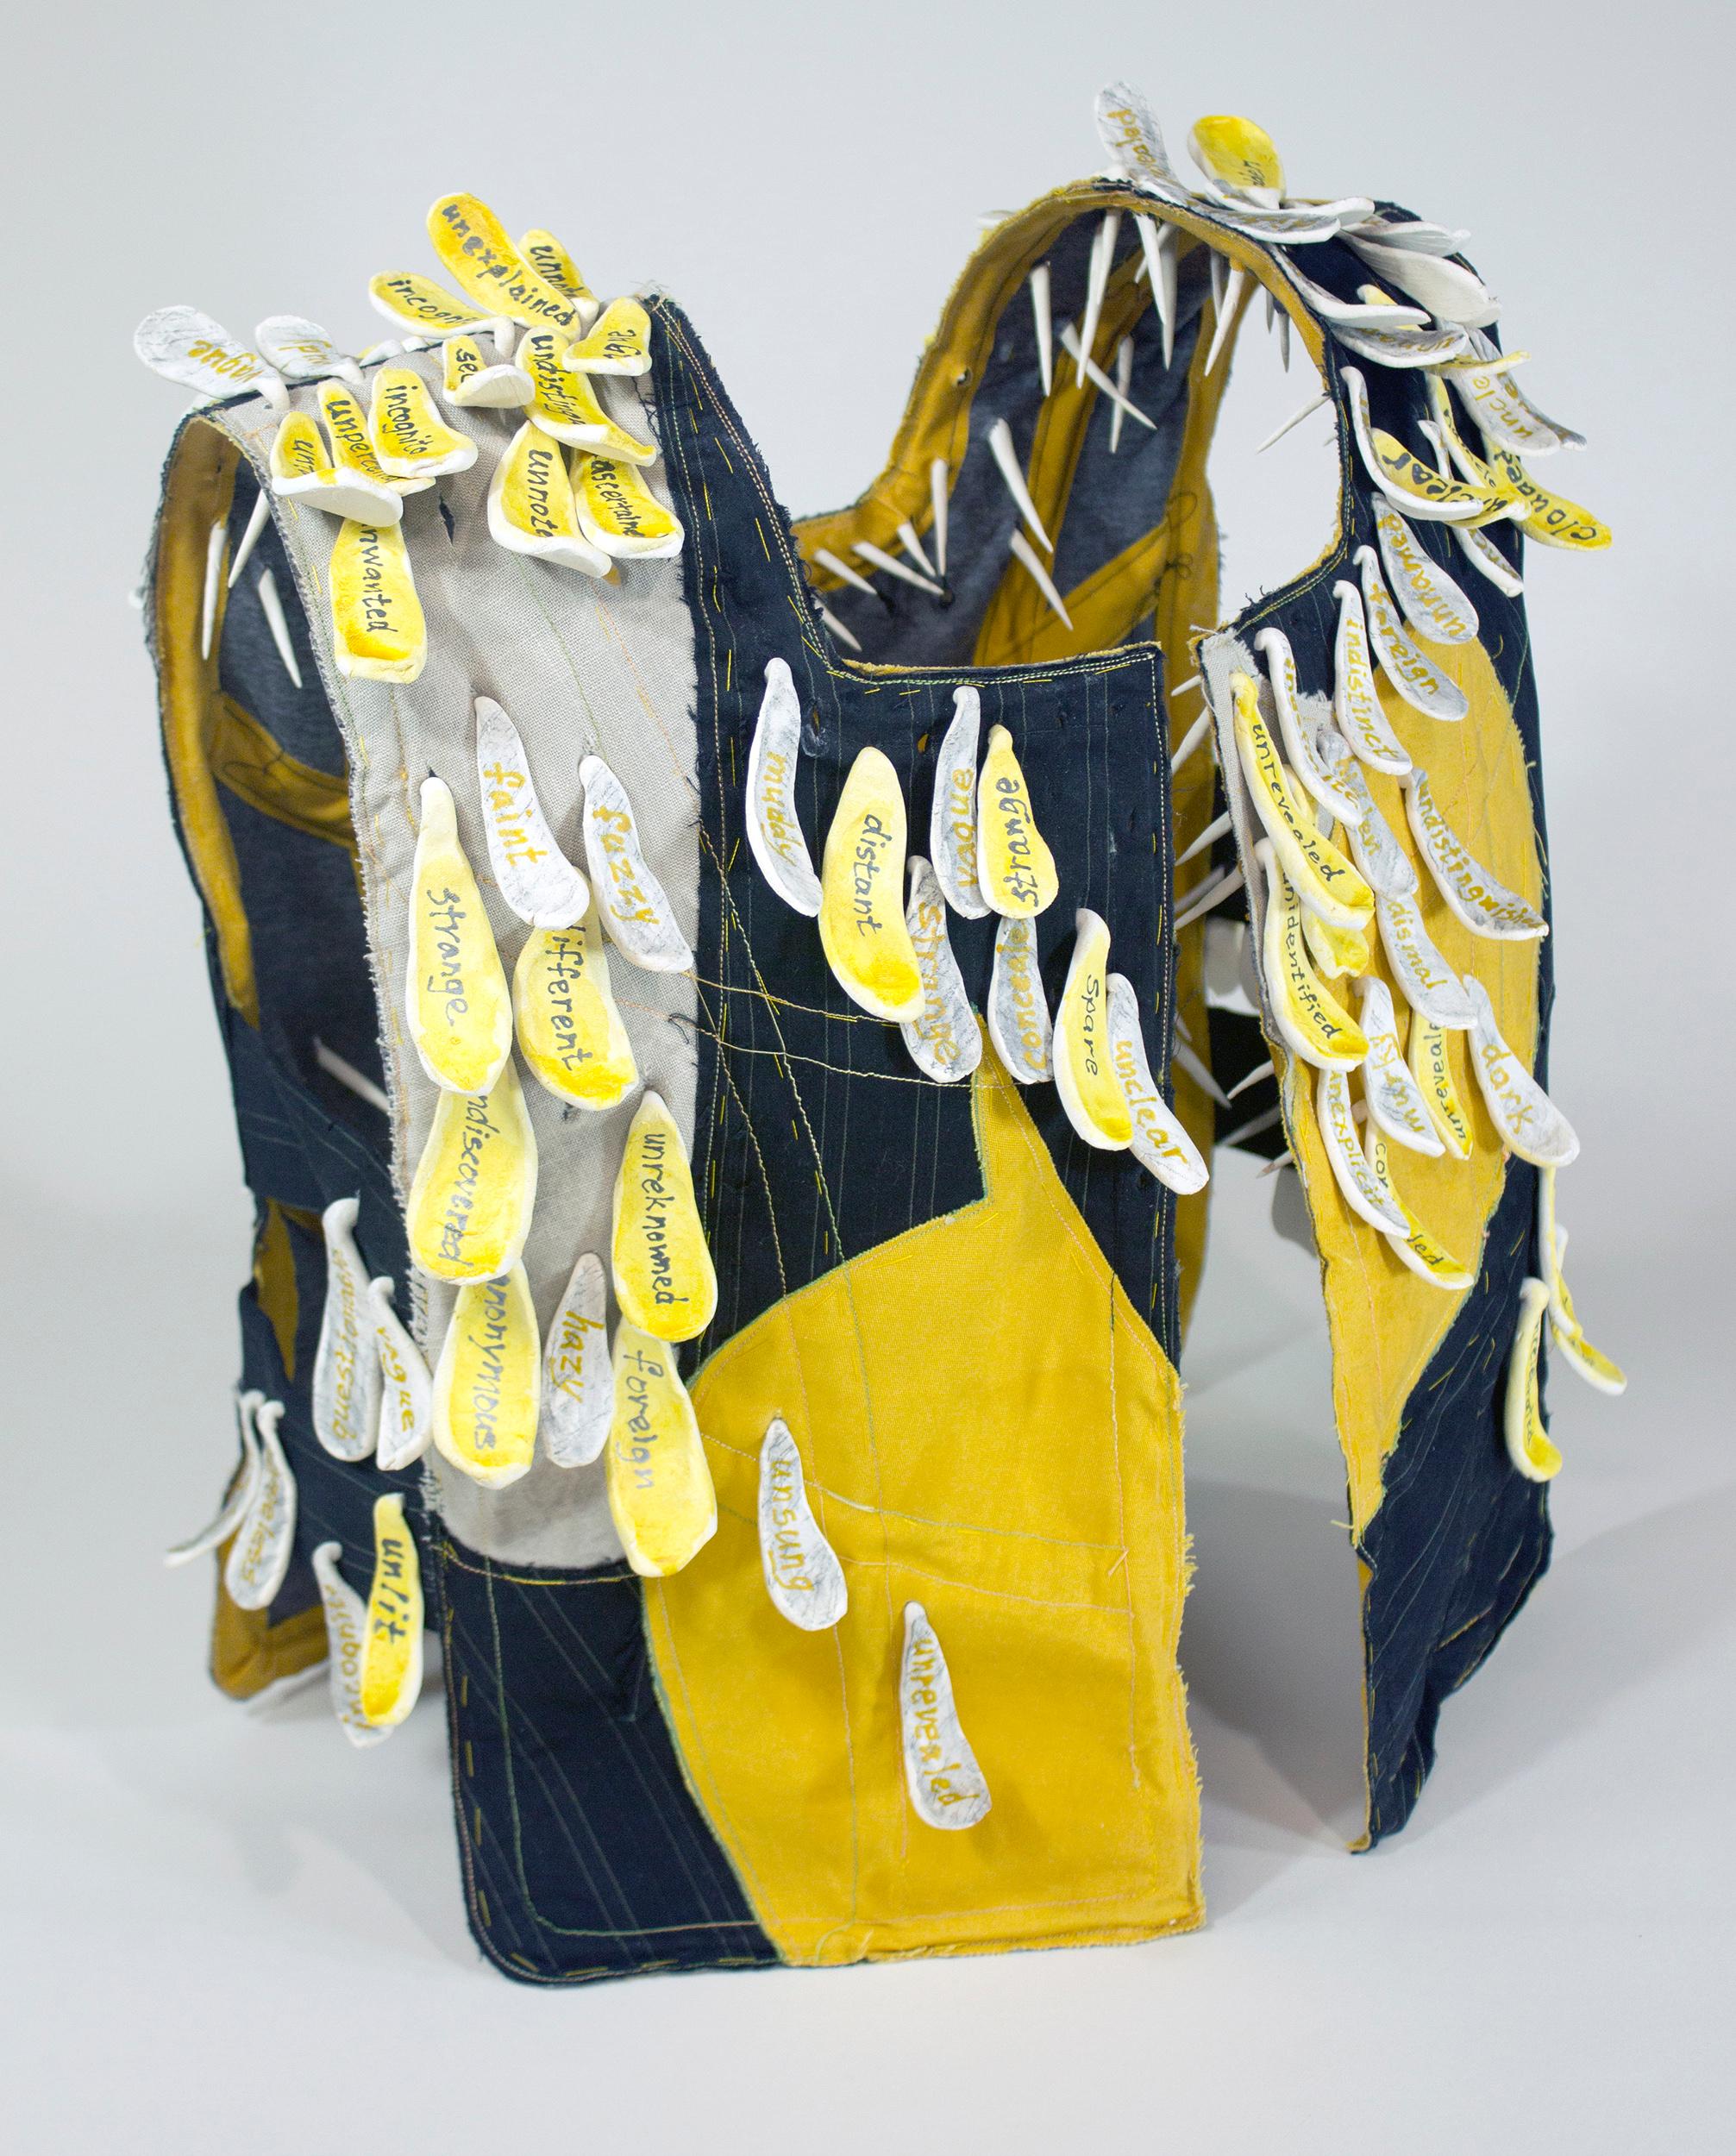 "Caution", ceramic, vest, black, bright, yellow, mixed media, sculpture - Mixed Media Art by Virginia Mahoney